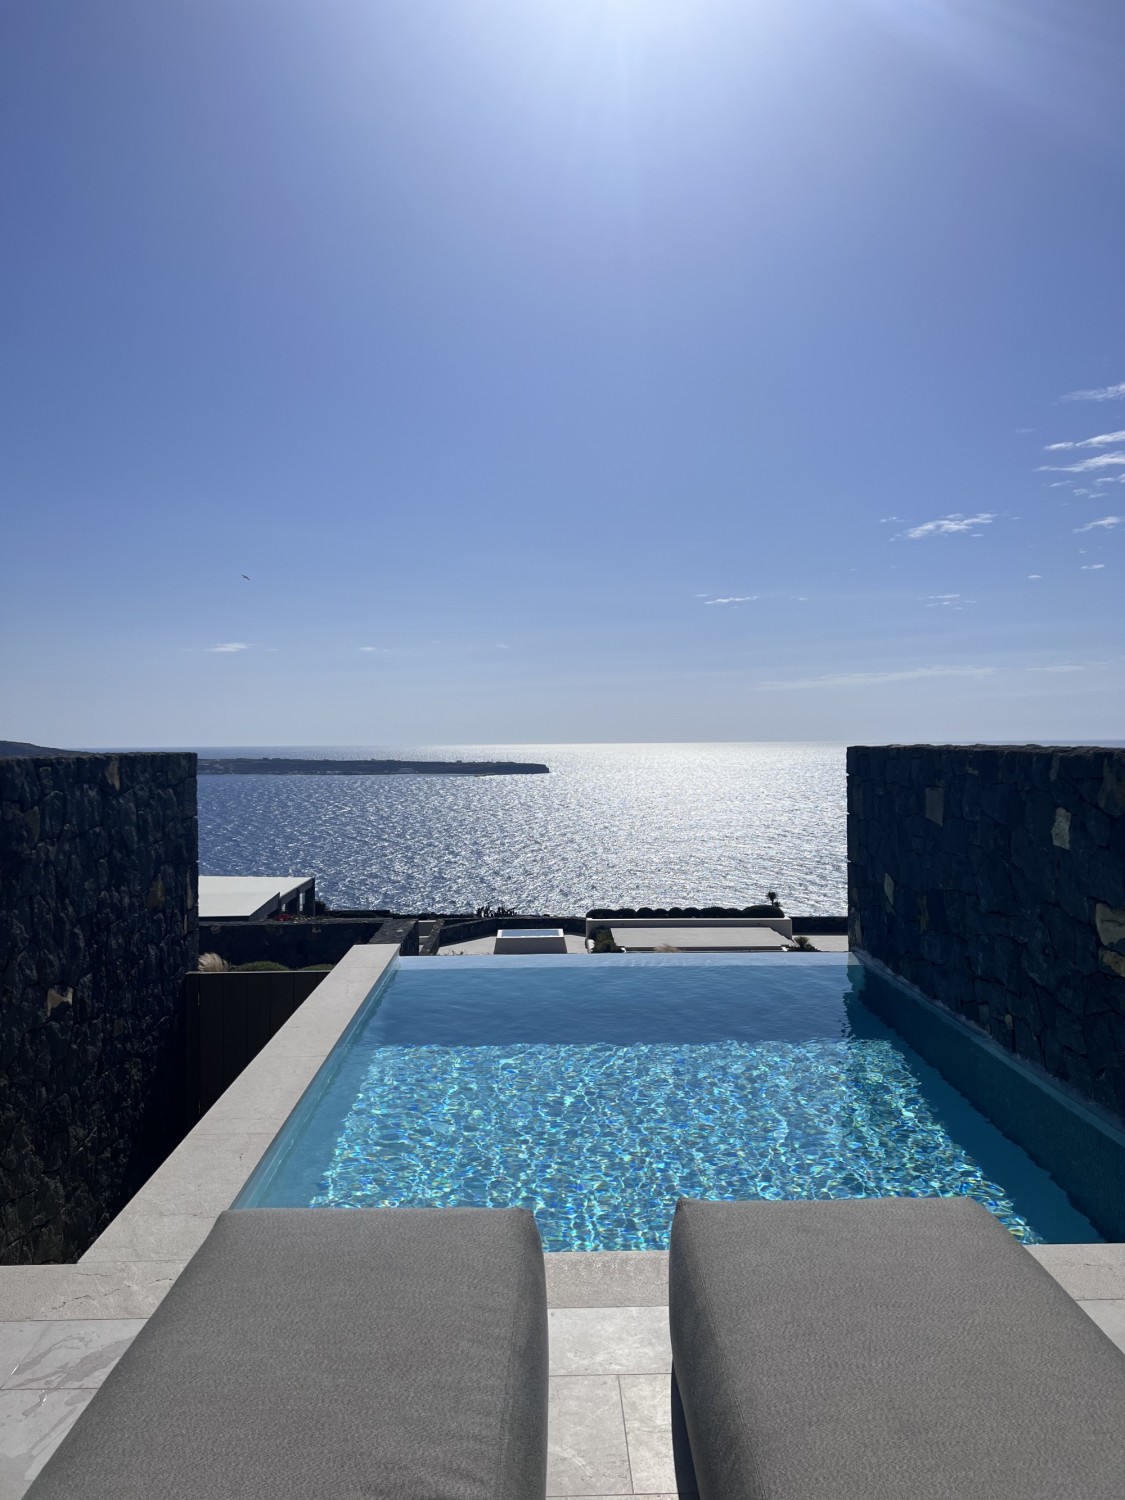 square infinity pool overlooking the ocean